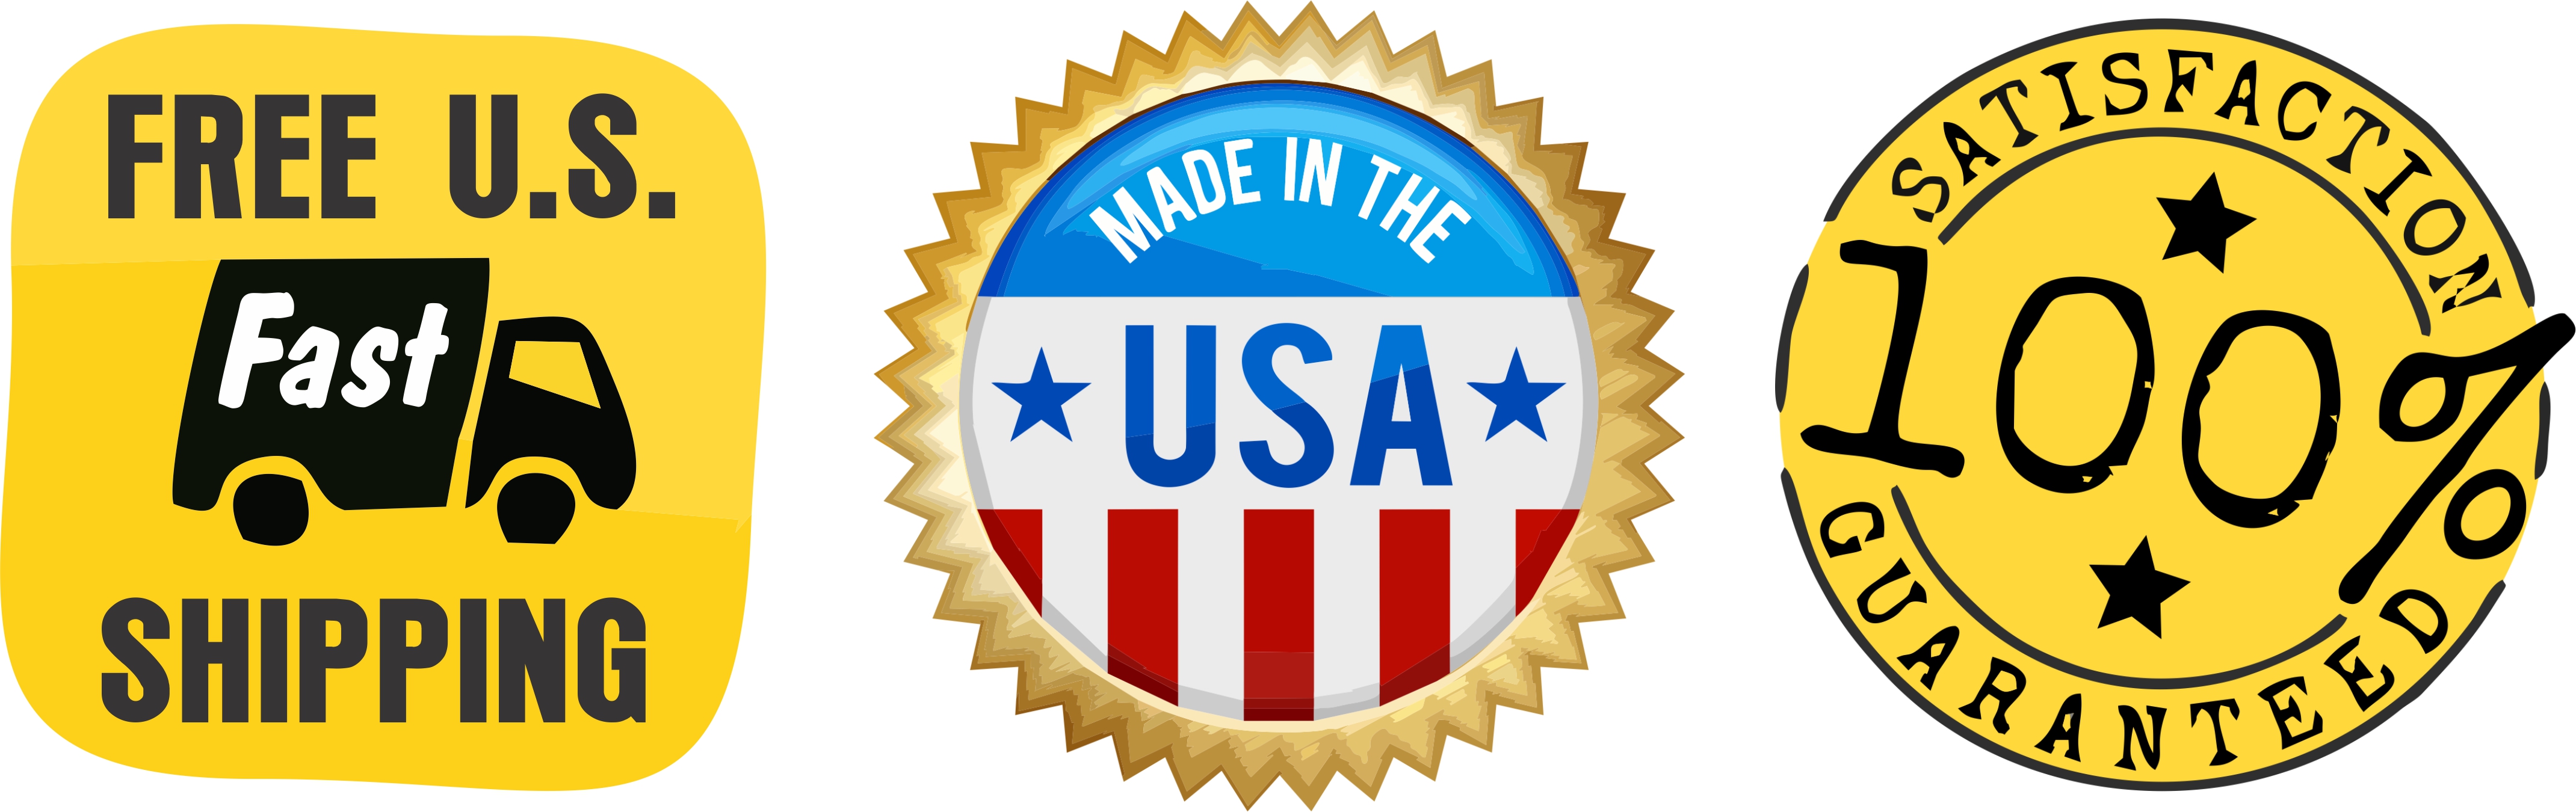 Free US Shipping! Made in USA! 100% Guarantee!